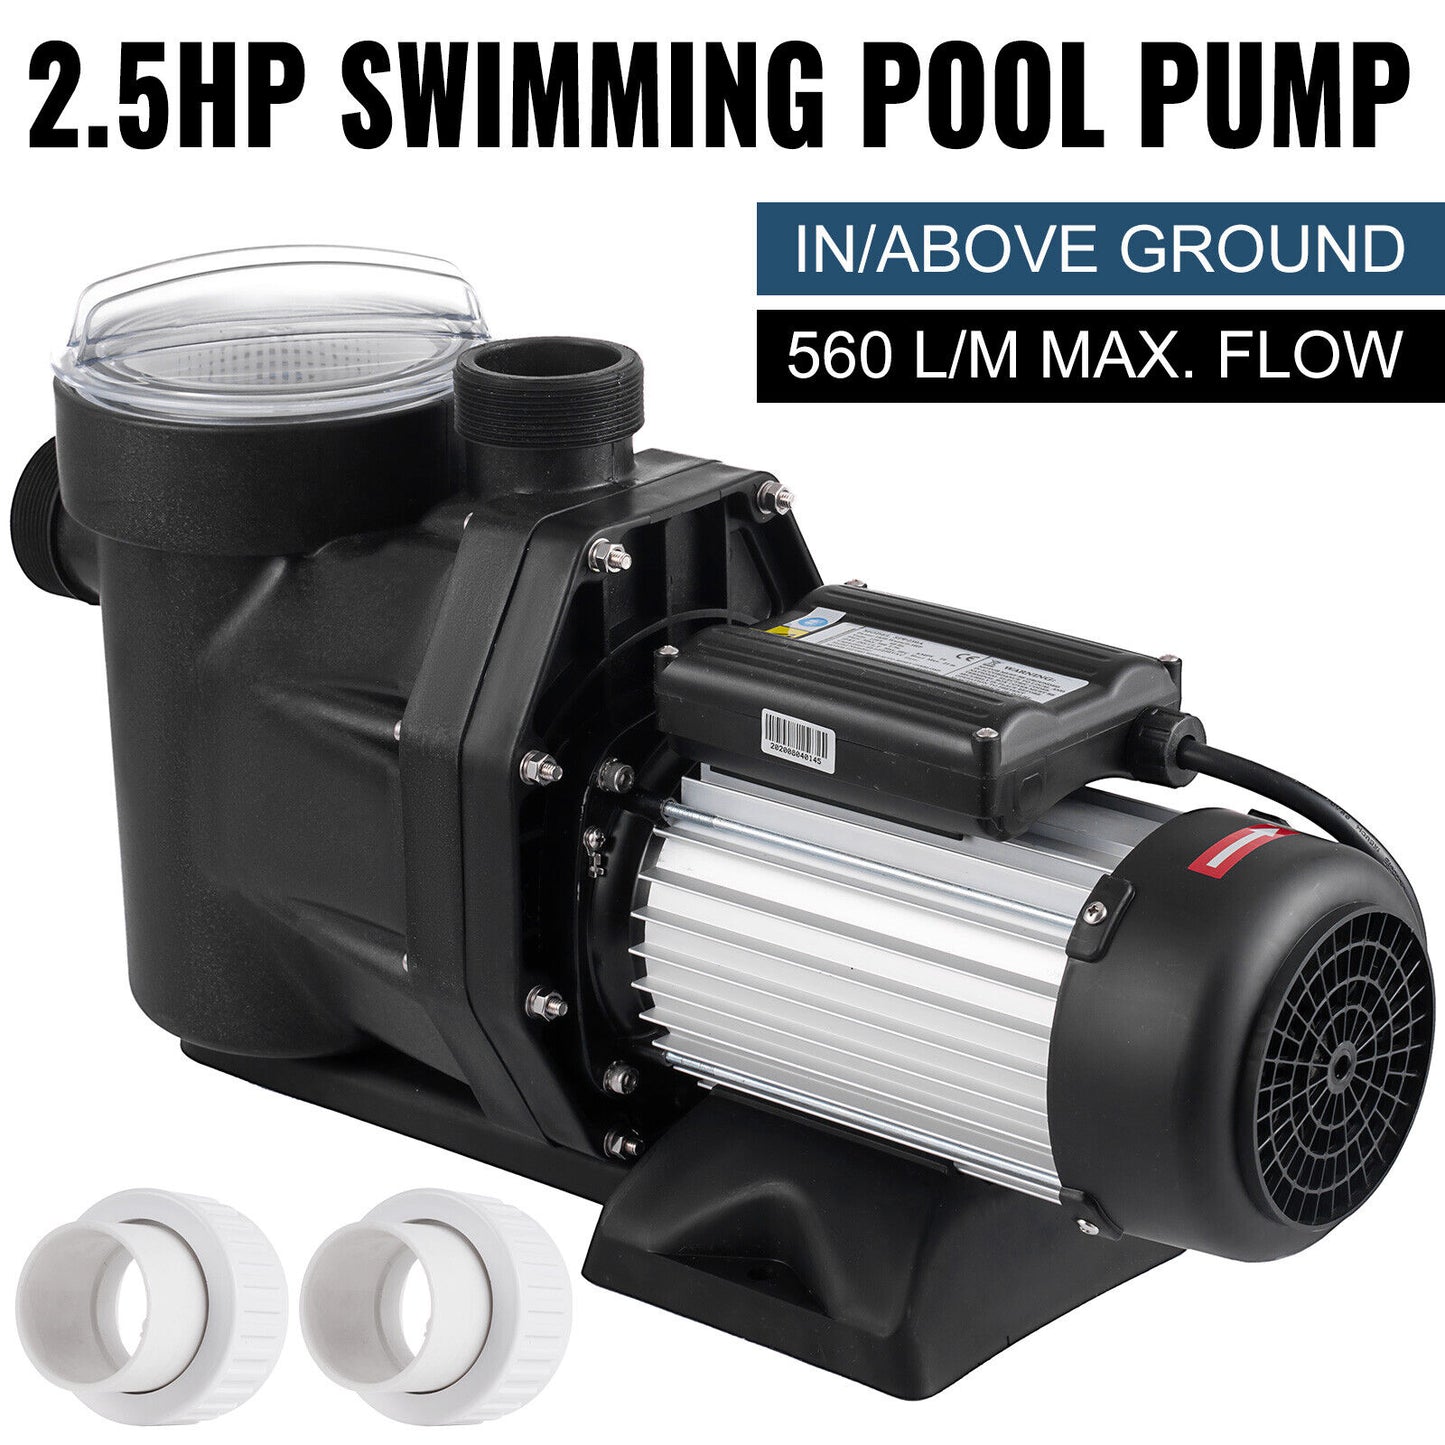 Hayward 2.5HP Swimming Pool Pump In/Above Ground 1850w Motor W/ Strainer Basket